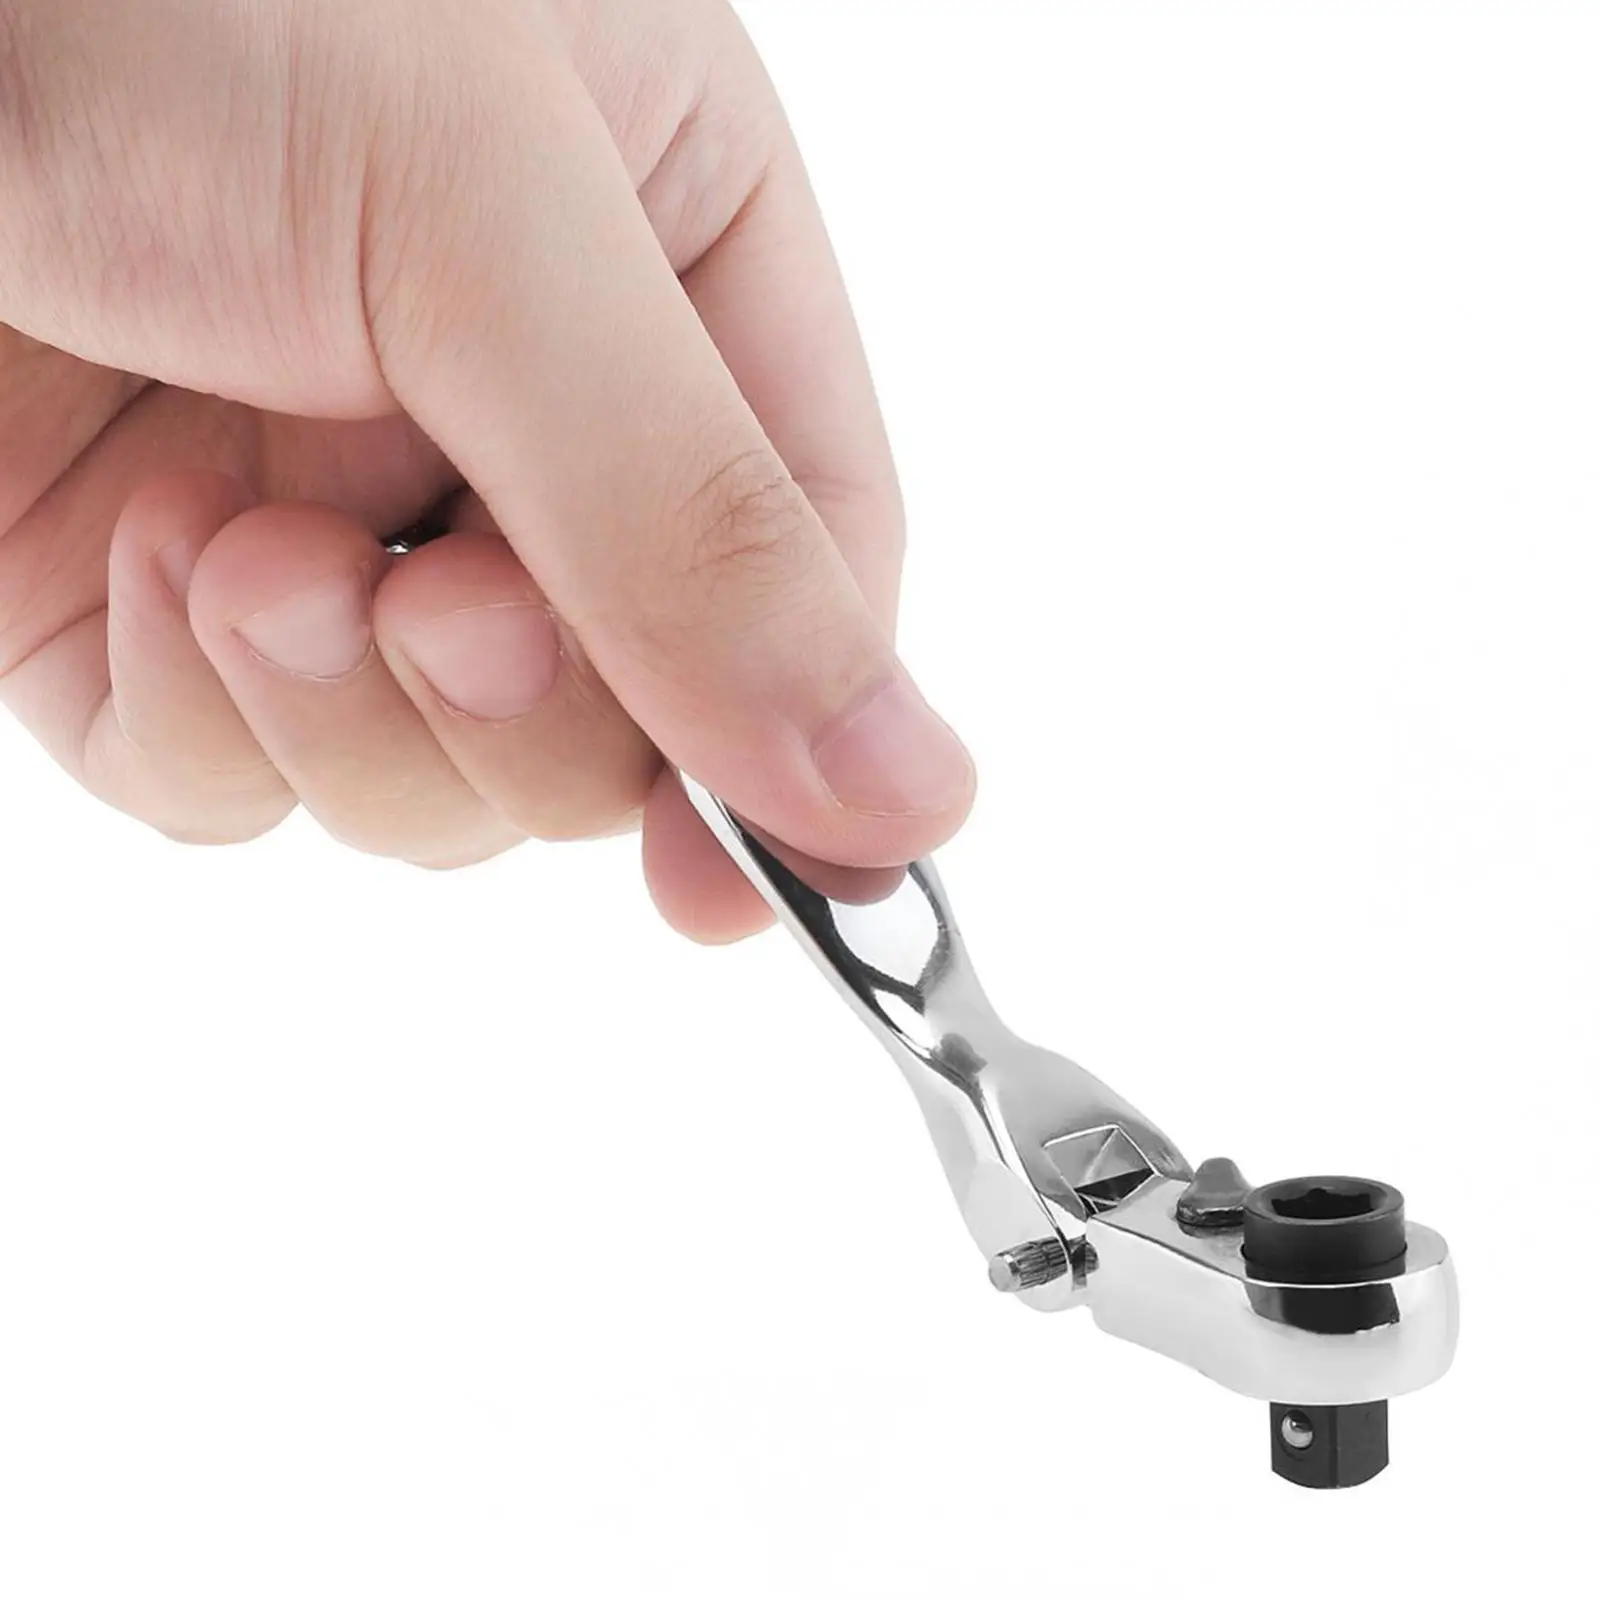 Mini Ratchet Wrench Drive Bit Ratchet Portable Gear Hand Ratchet Wrench Socket Batch Head wrench for Furniture Assembling